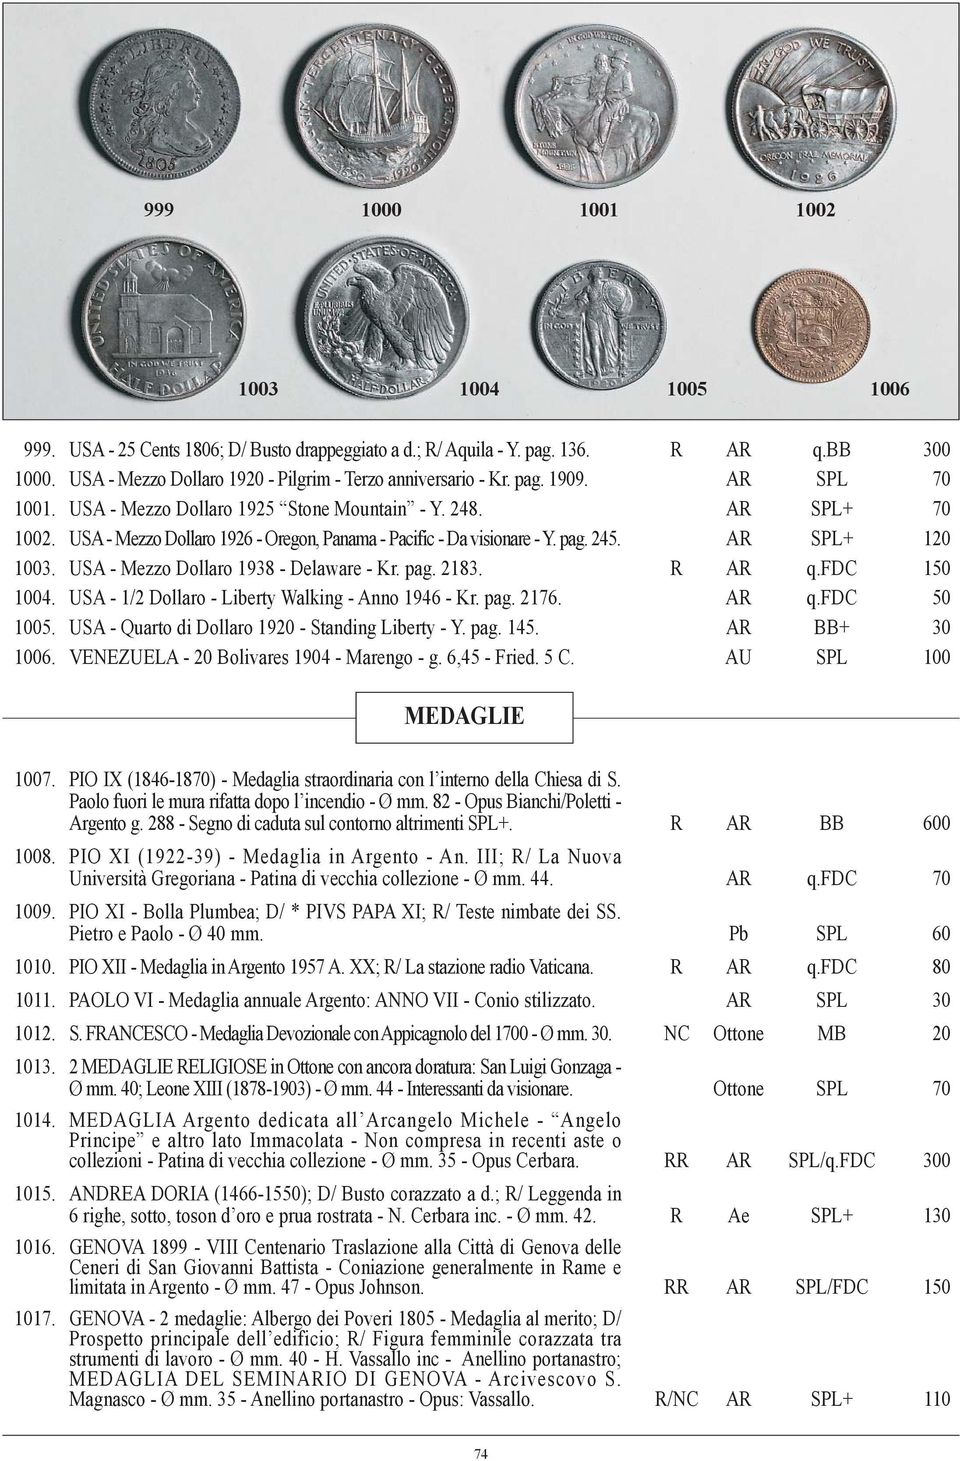 USA - Mezzo Dollaro 1938 - Delaware - Kr. pag. 2183. R AR q.fdc 150 1004. USA - 1/2 Dollaro - Liberty Walking - Anno 1946 - Kr. pag. 2176. AR q.fdc 50 1005.